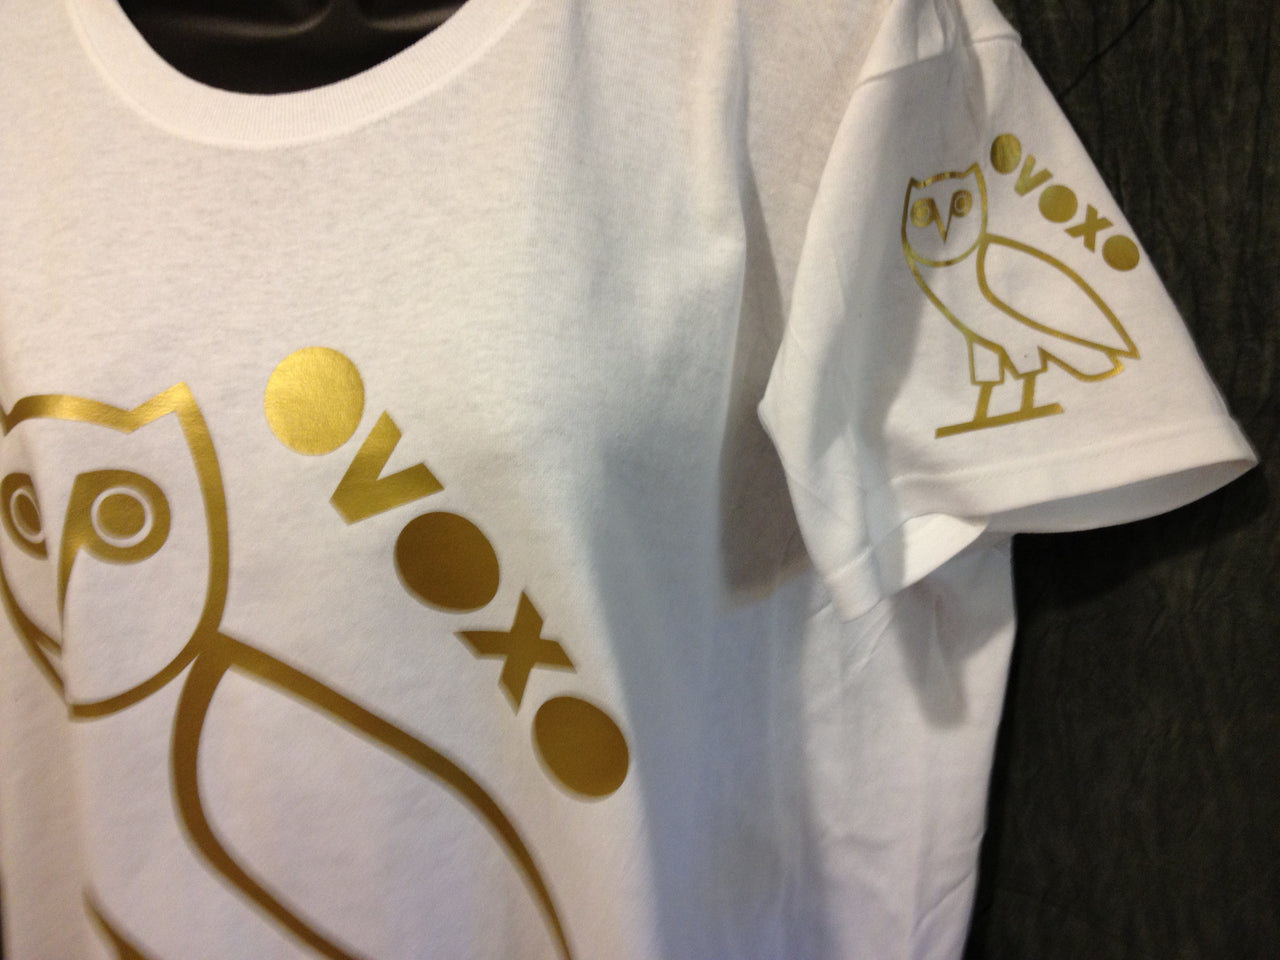 Ovo Drake October's Very Own Ovoxo Owl Gang Girls Tshirt: Gold Print on White Womens Tshirt - TshirtNow.net - 2